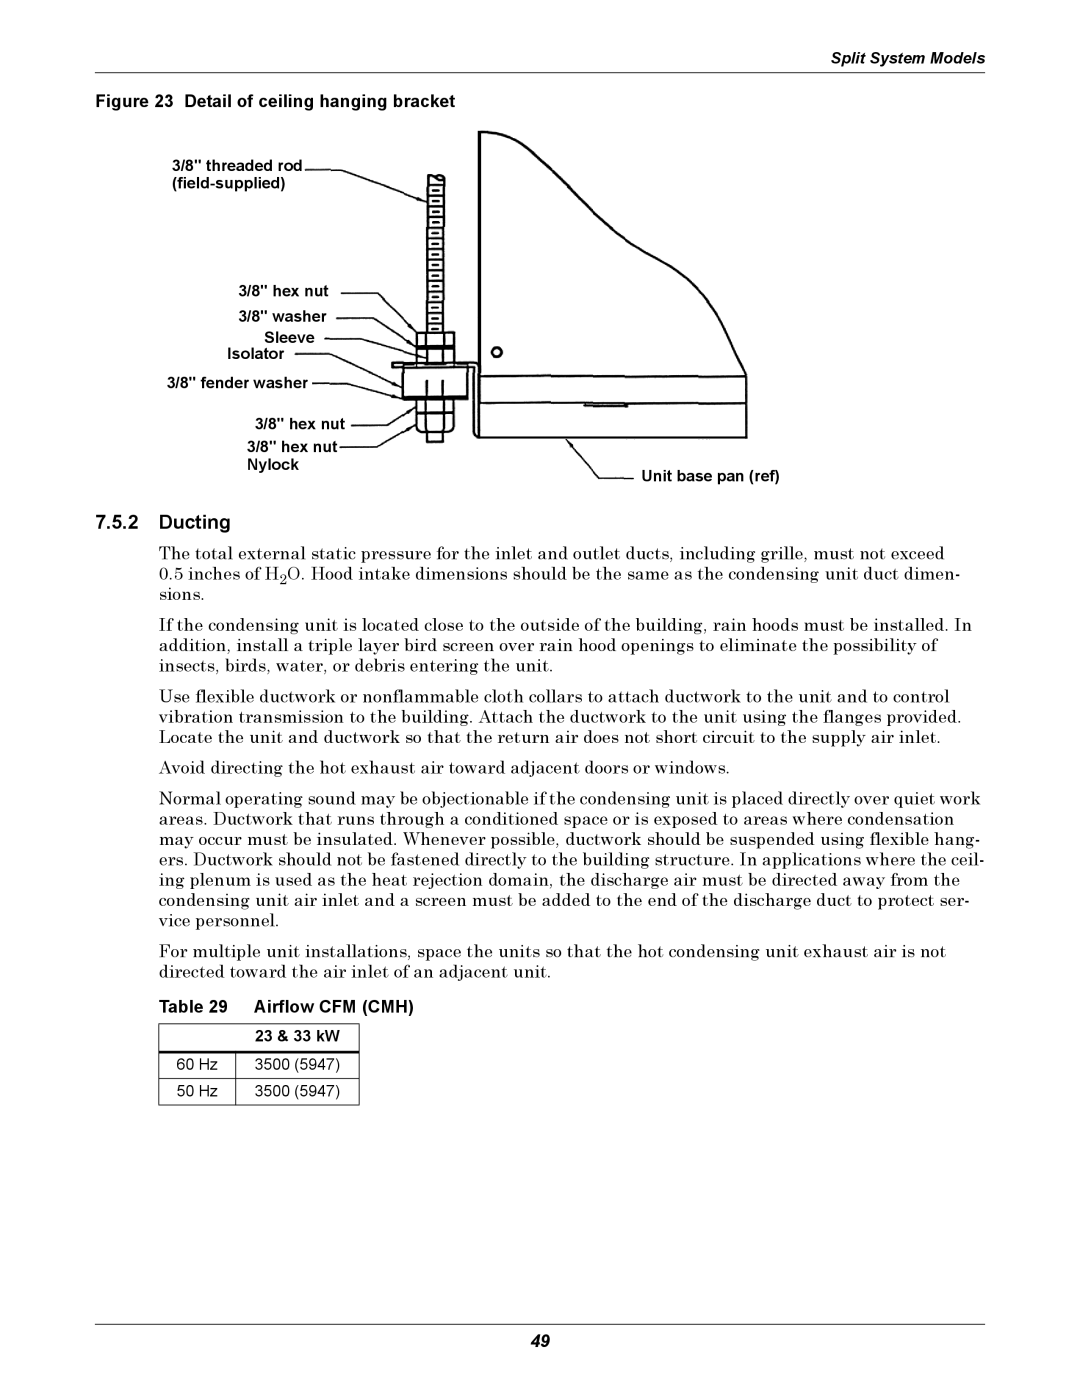 Liebert ITR installation manual Ducting, Airflow CFM CMH 